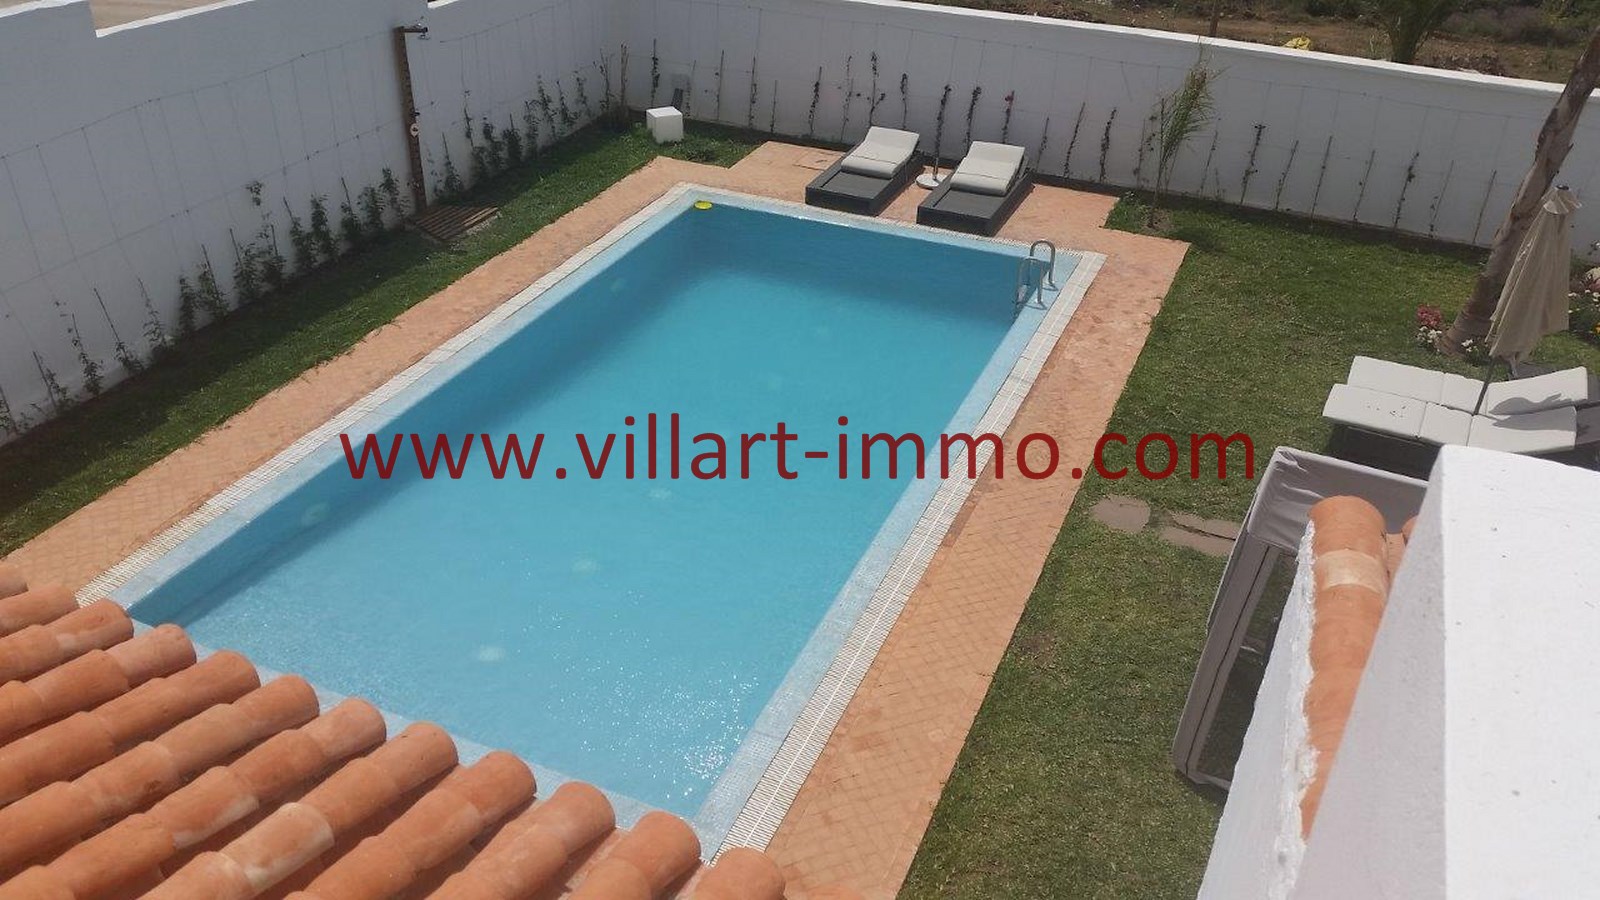 13-location-villa-meublee-boubana-tanger-piscine-jardin-lv847-villart-immo